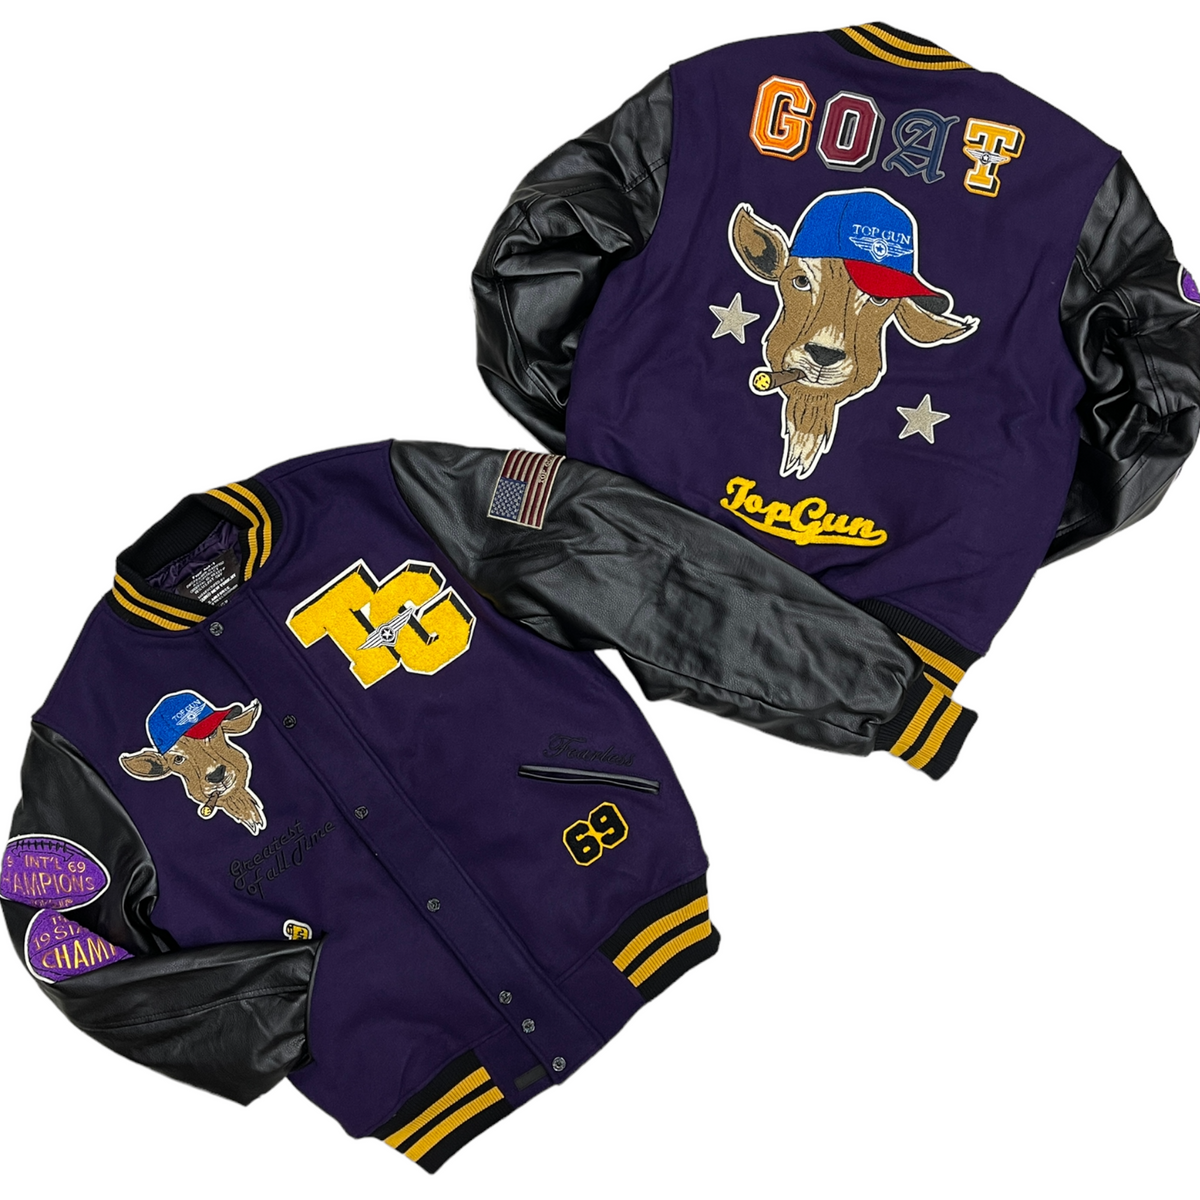 sleeve Top gun Varsity Jacket Purple w Wool leather goat